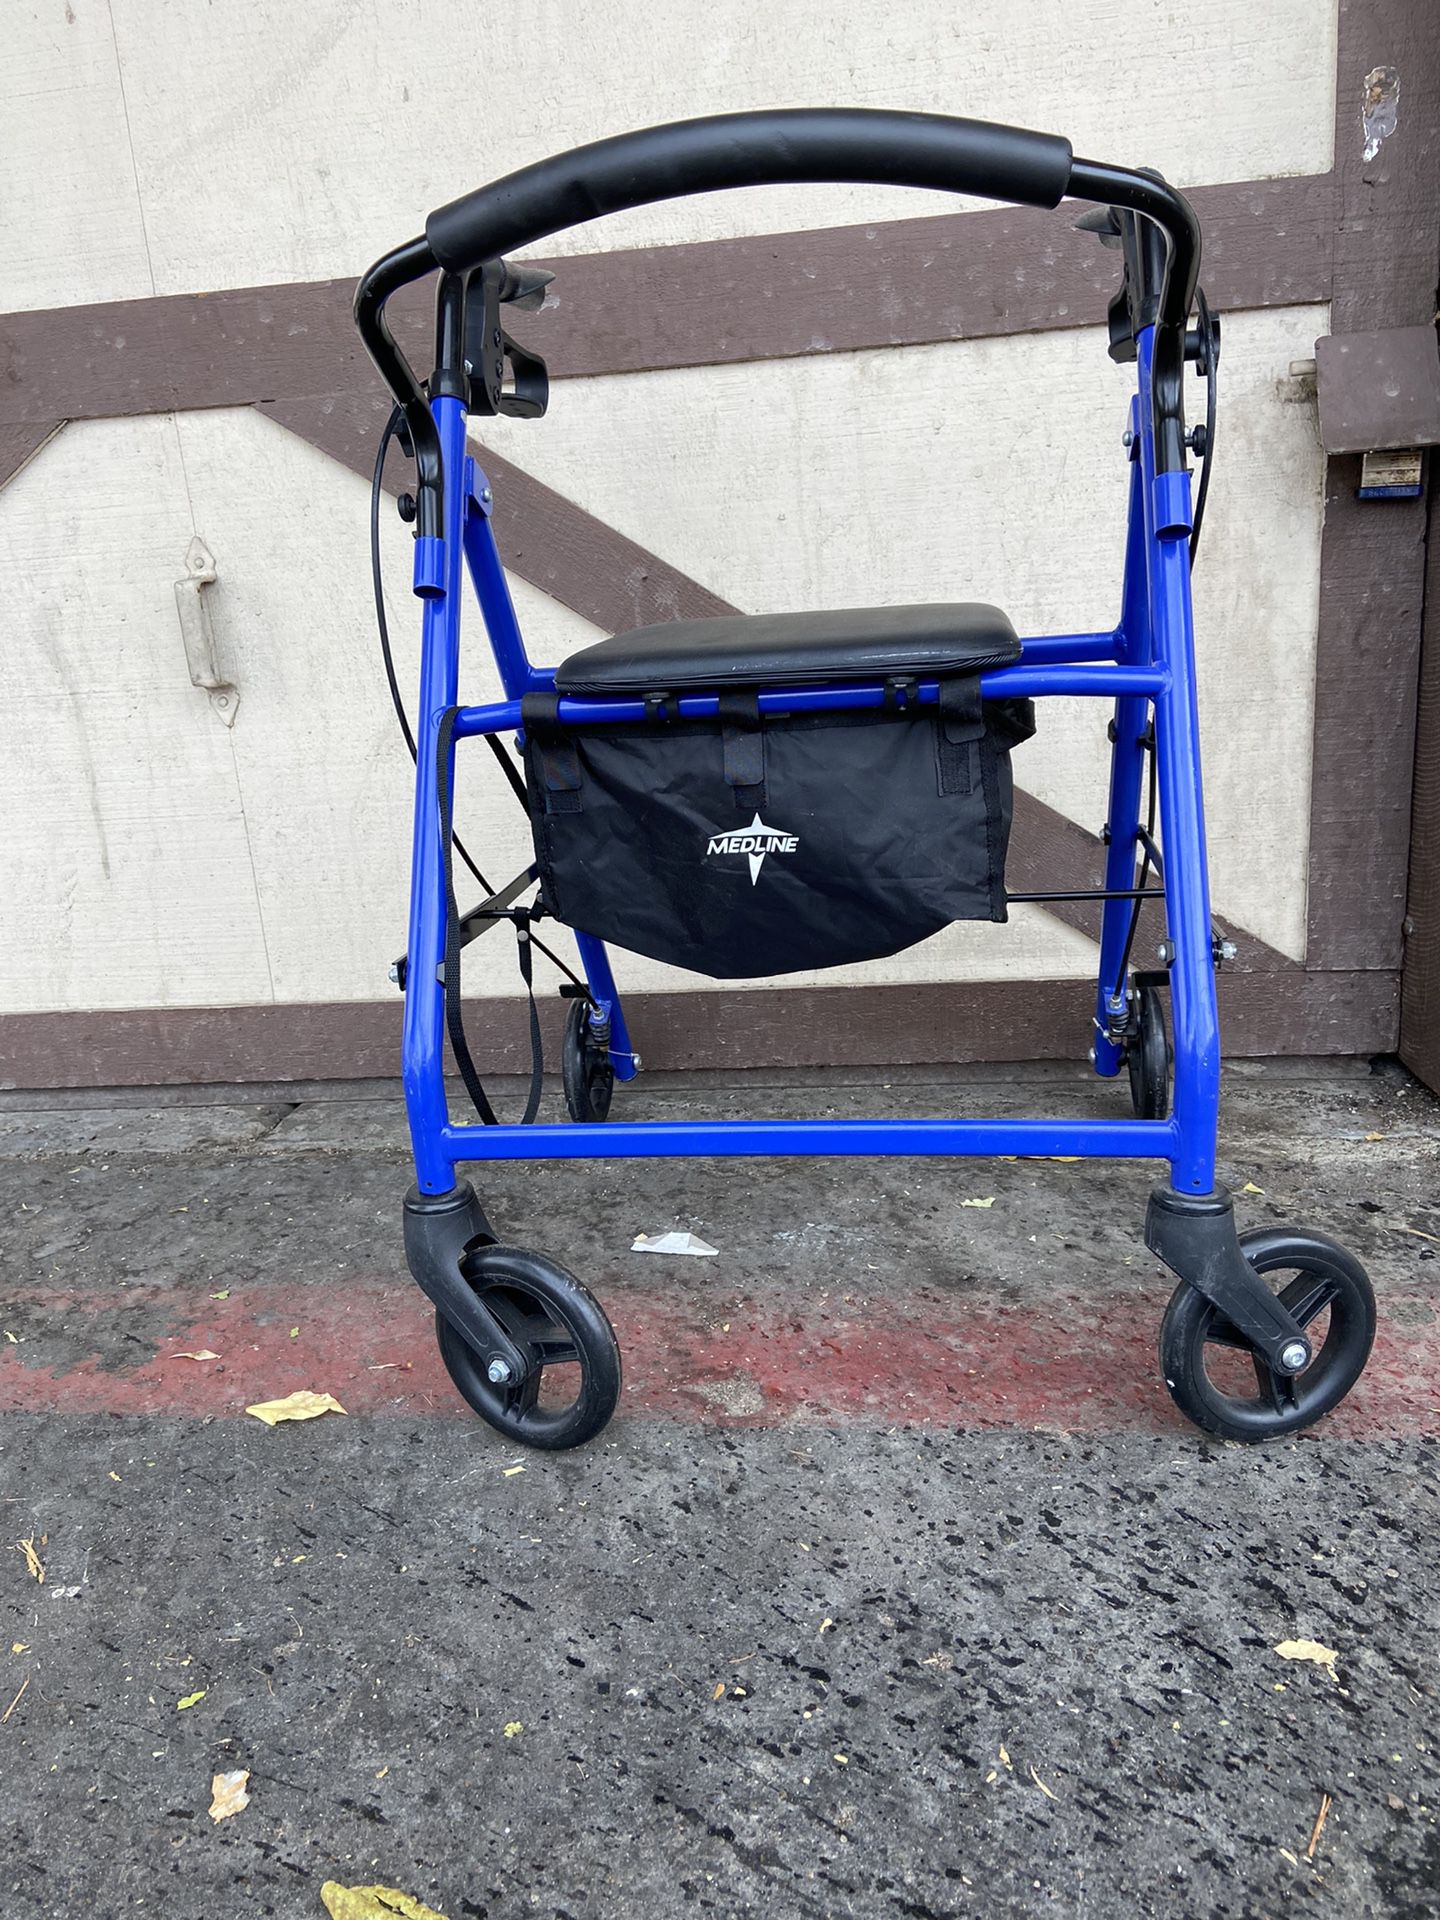 It’s good wheelchair